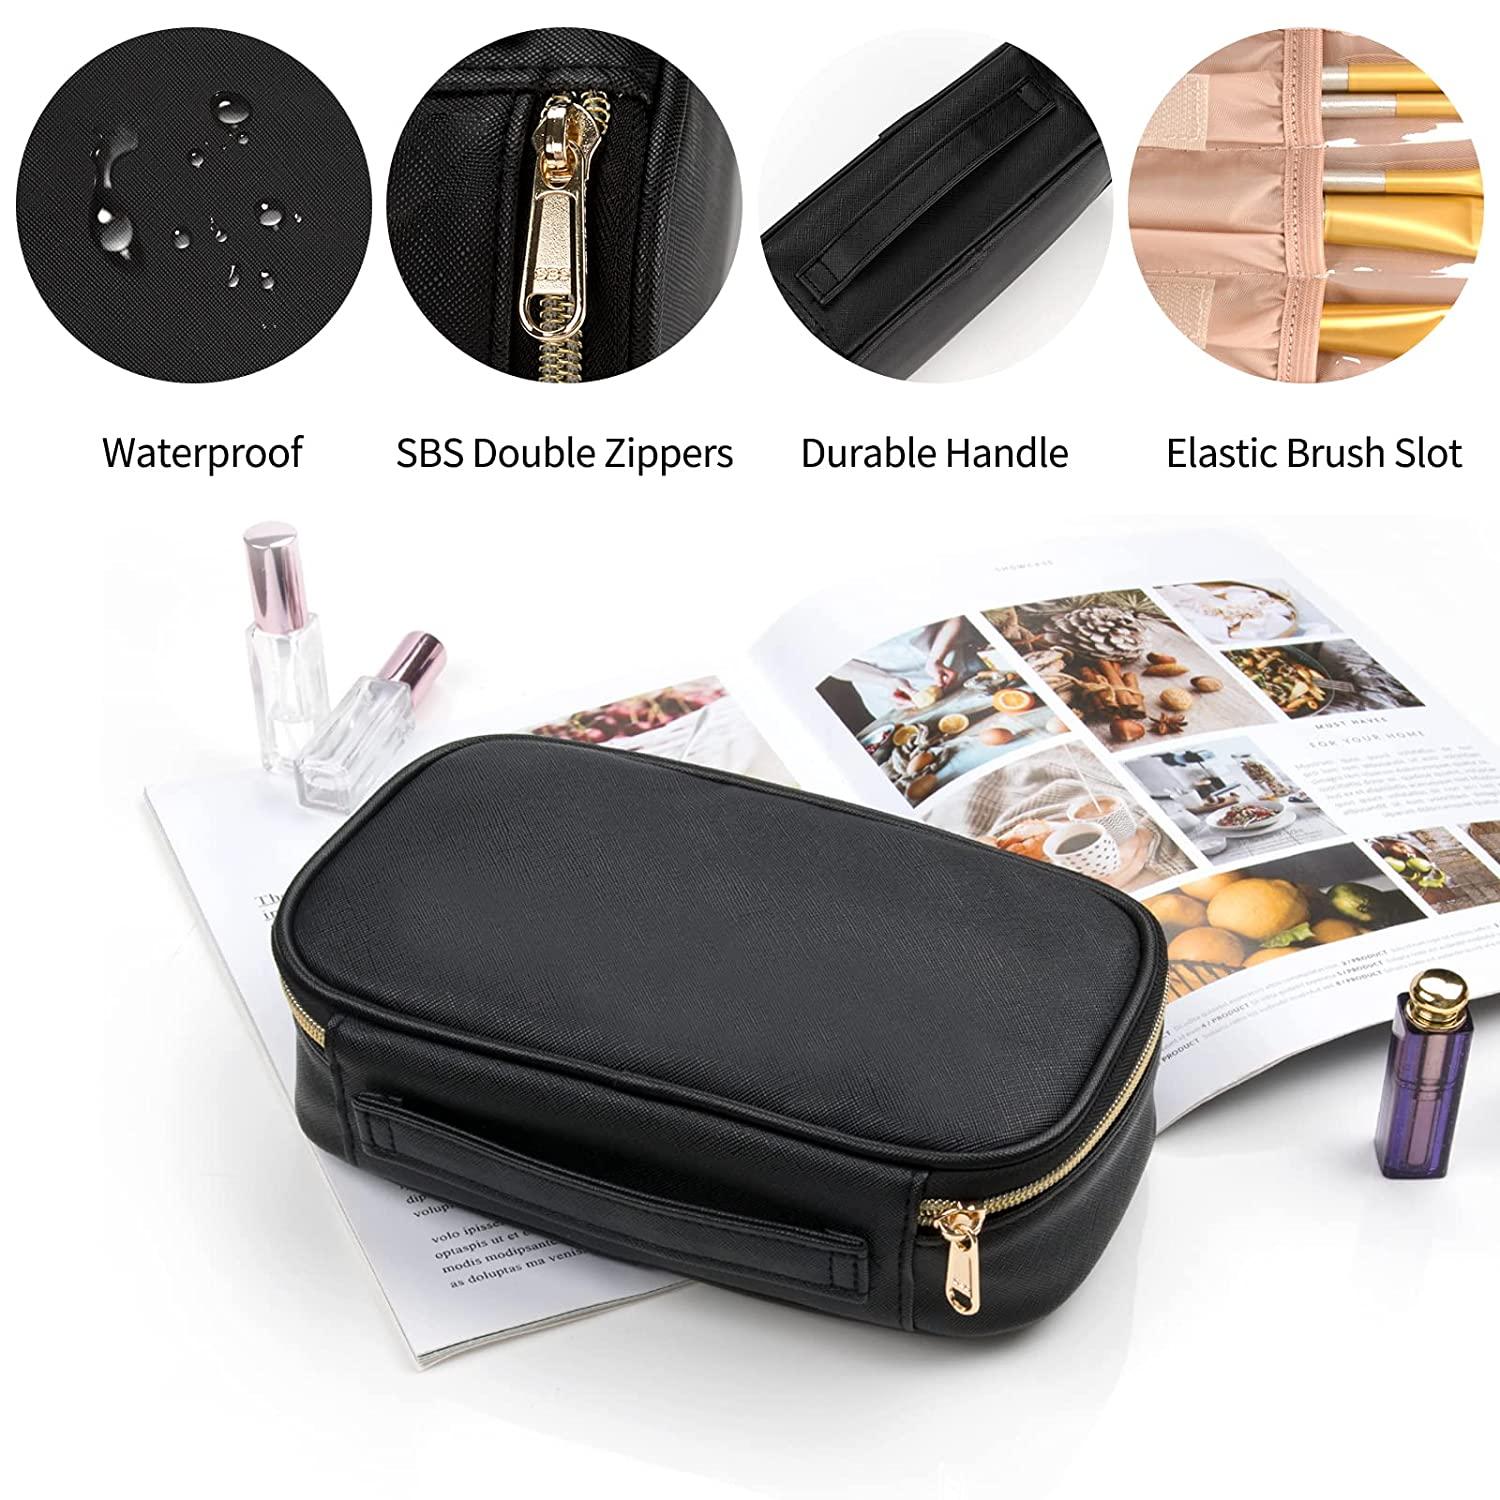 Zhaomeidaxi Small Makeup Bag for Purse Travel Makeup Pouch Mini Cosmetic Bag for Women Girls, Women's, Black